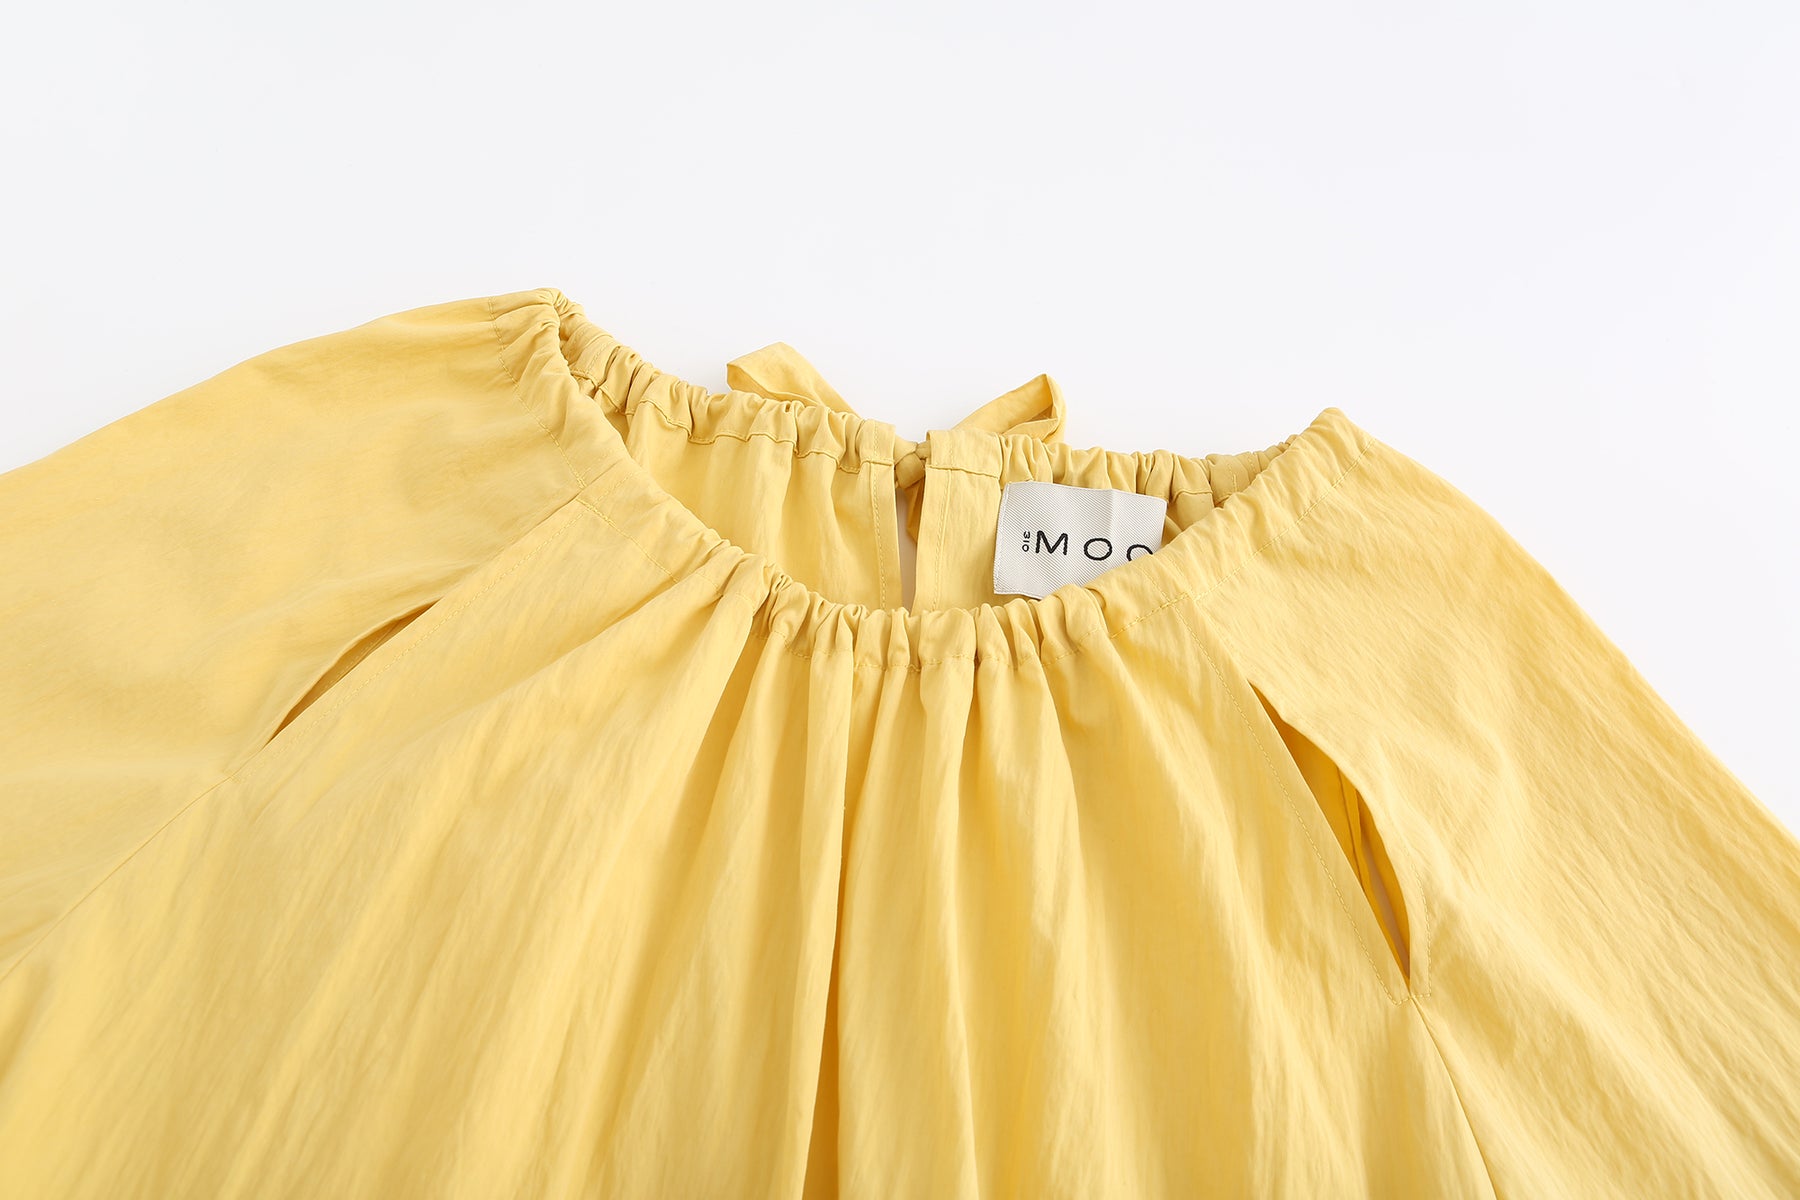 鏤空洋裝 - 黃色